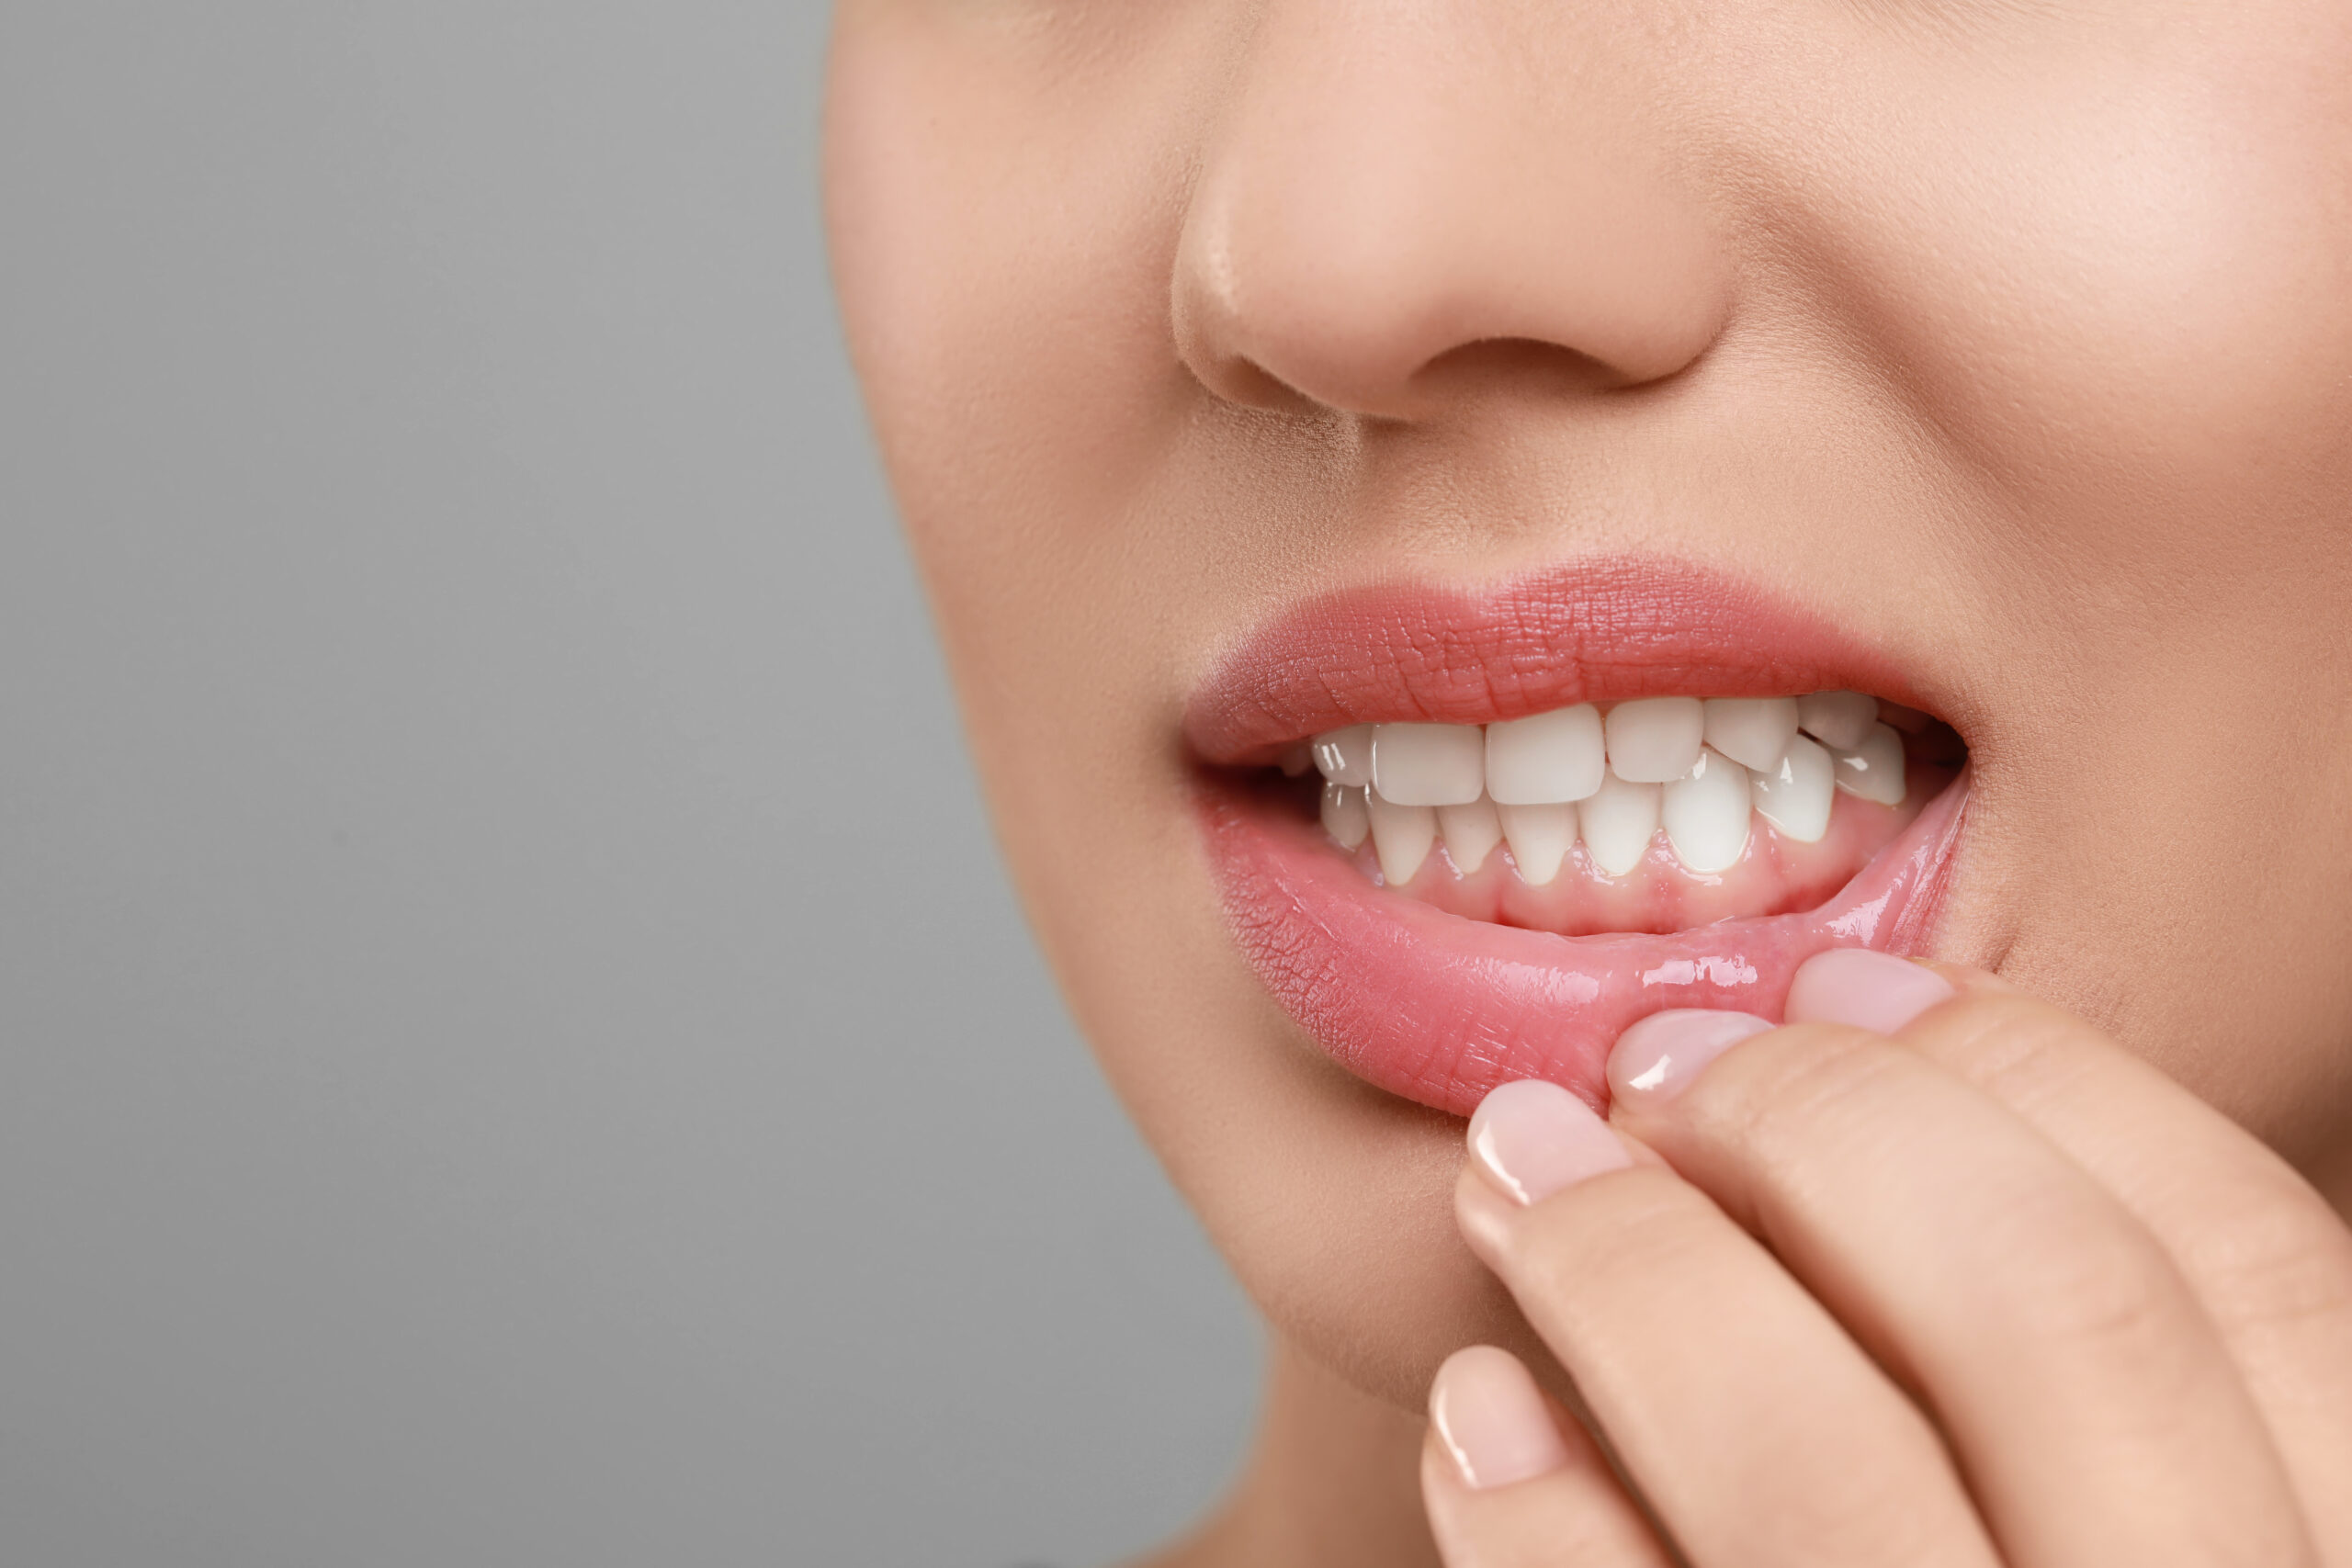 OVerland PArk, KS offers periodontal care 